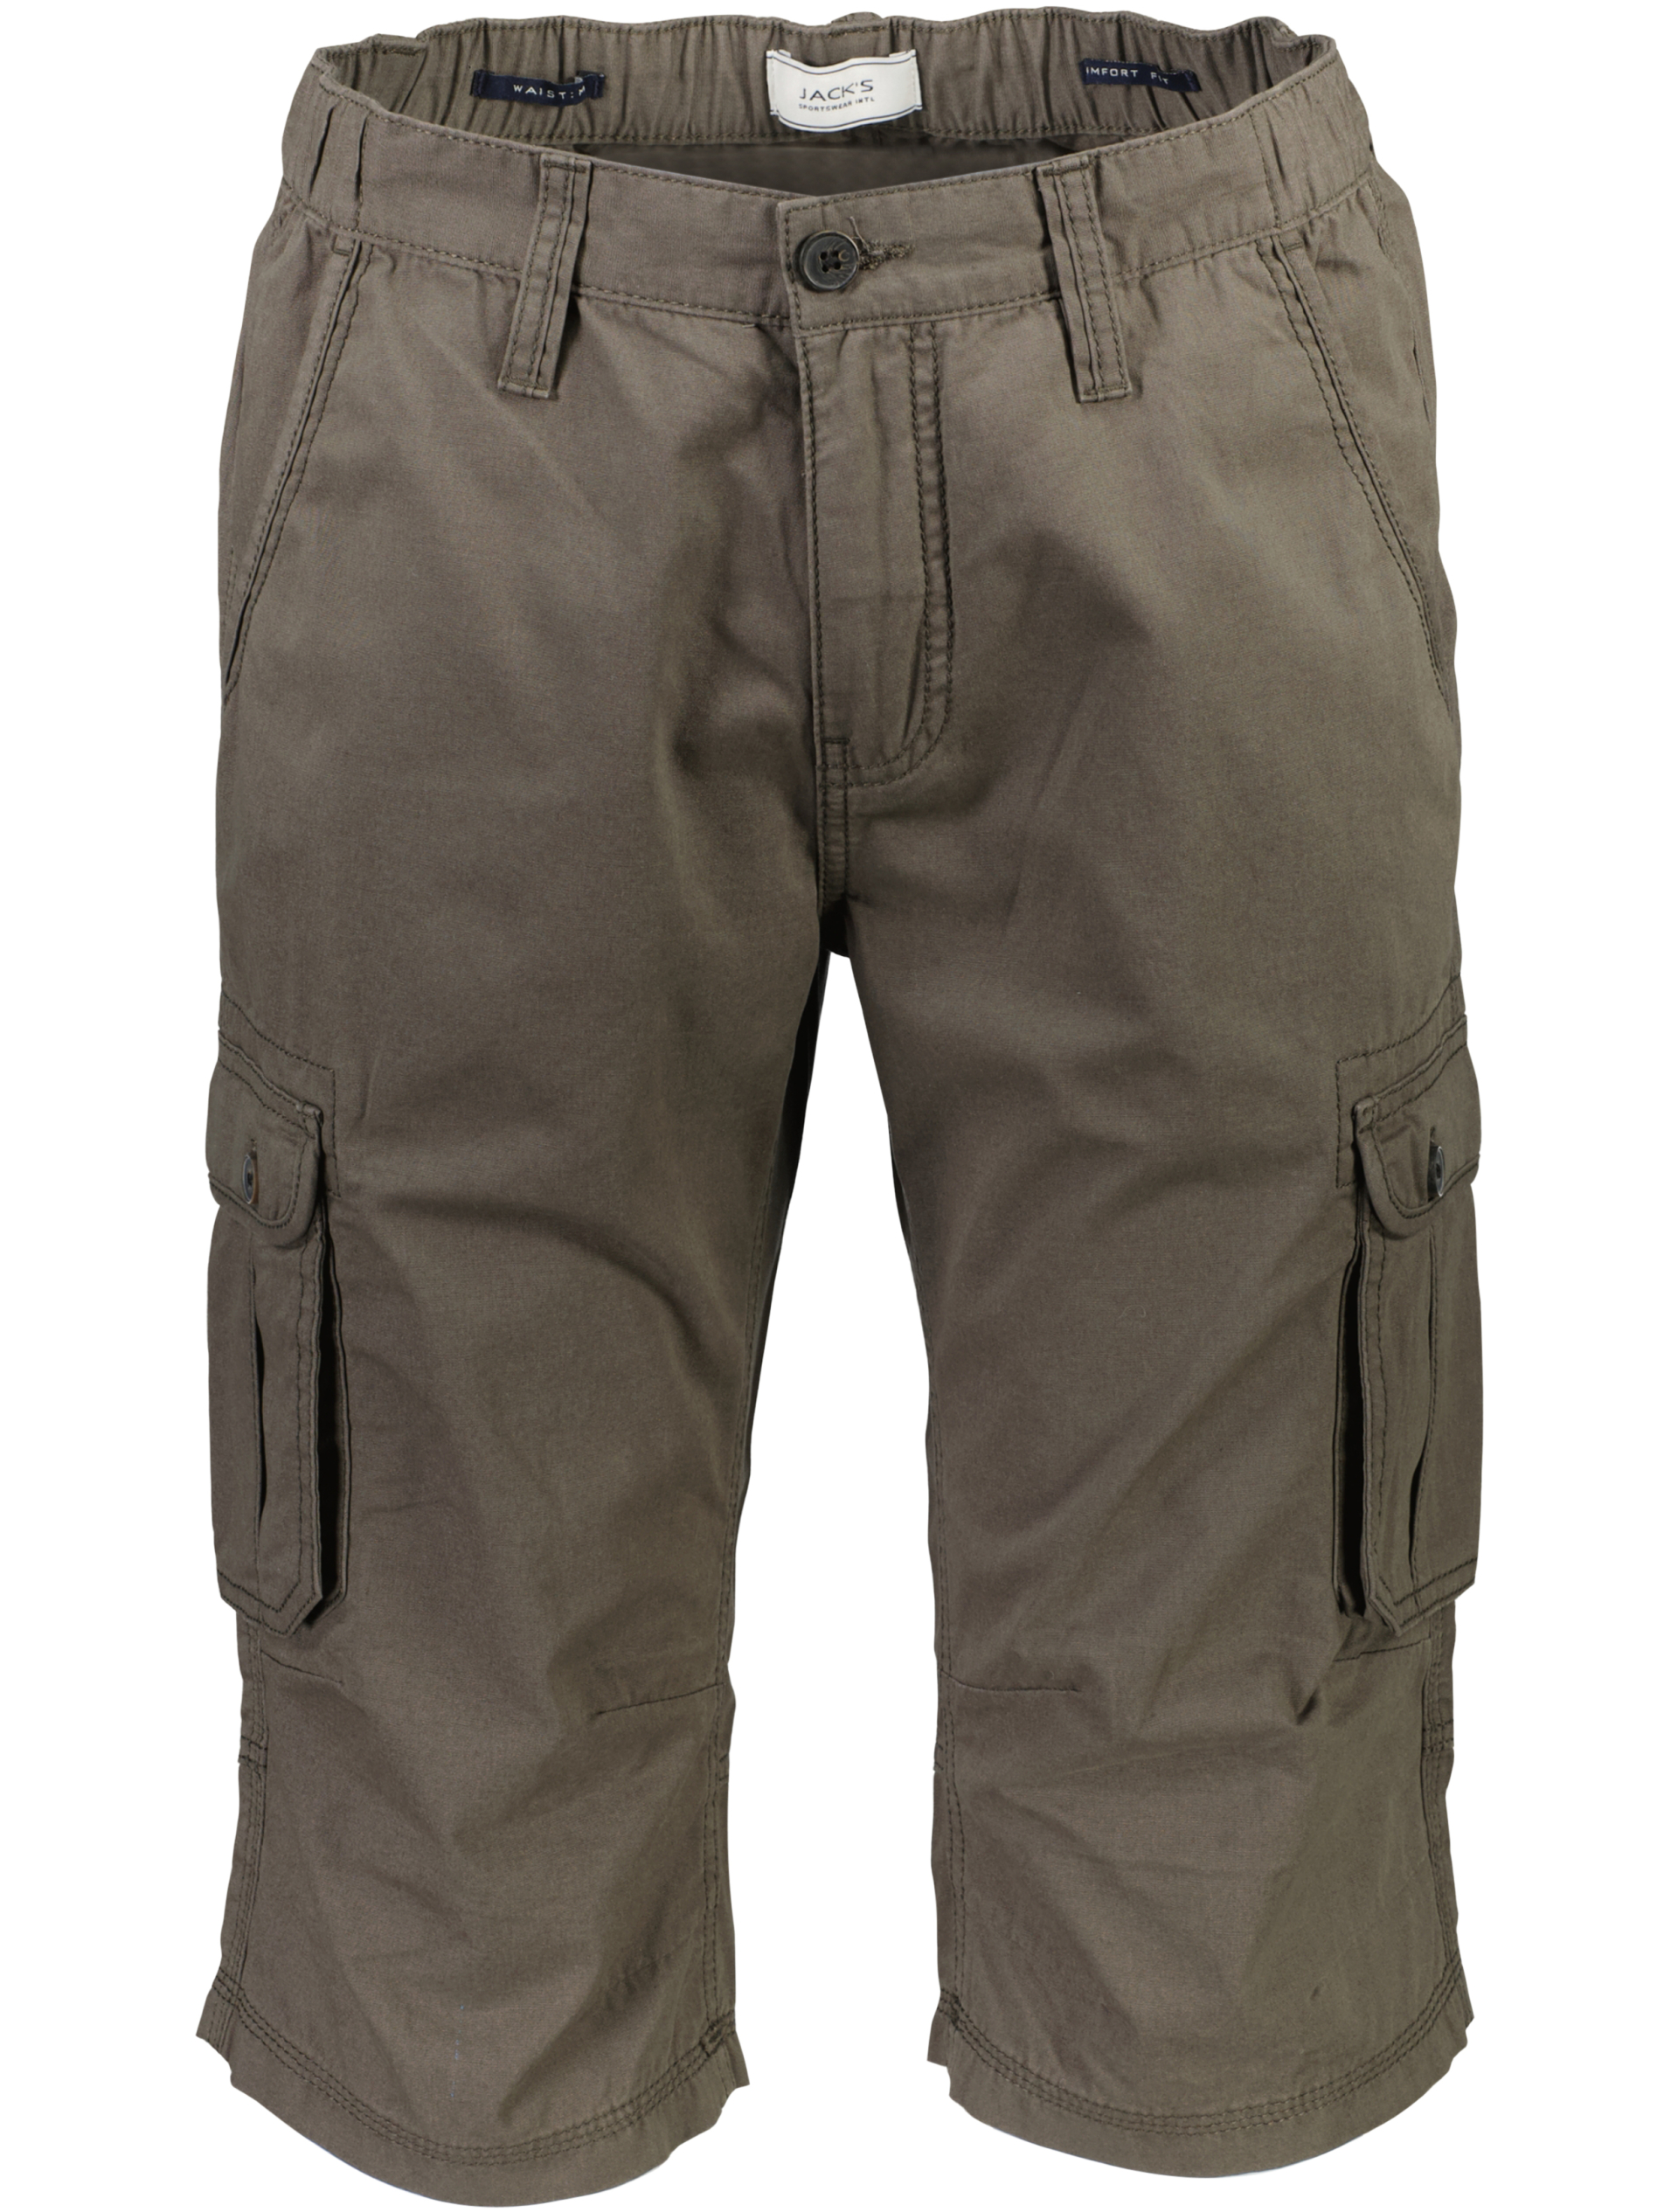 Jack's Cargo shorts grøn / dk army